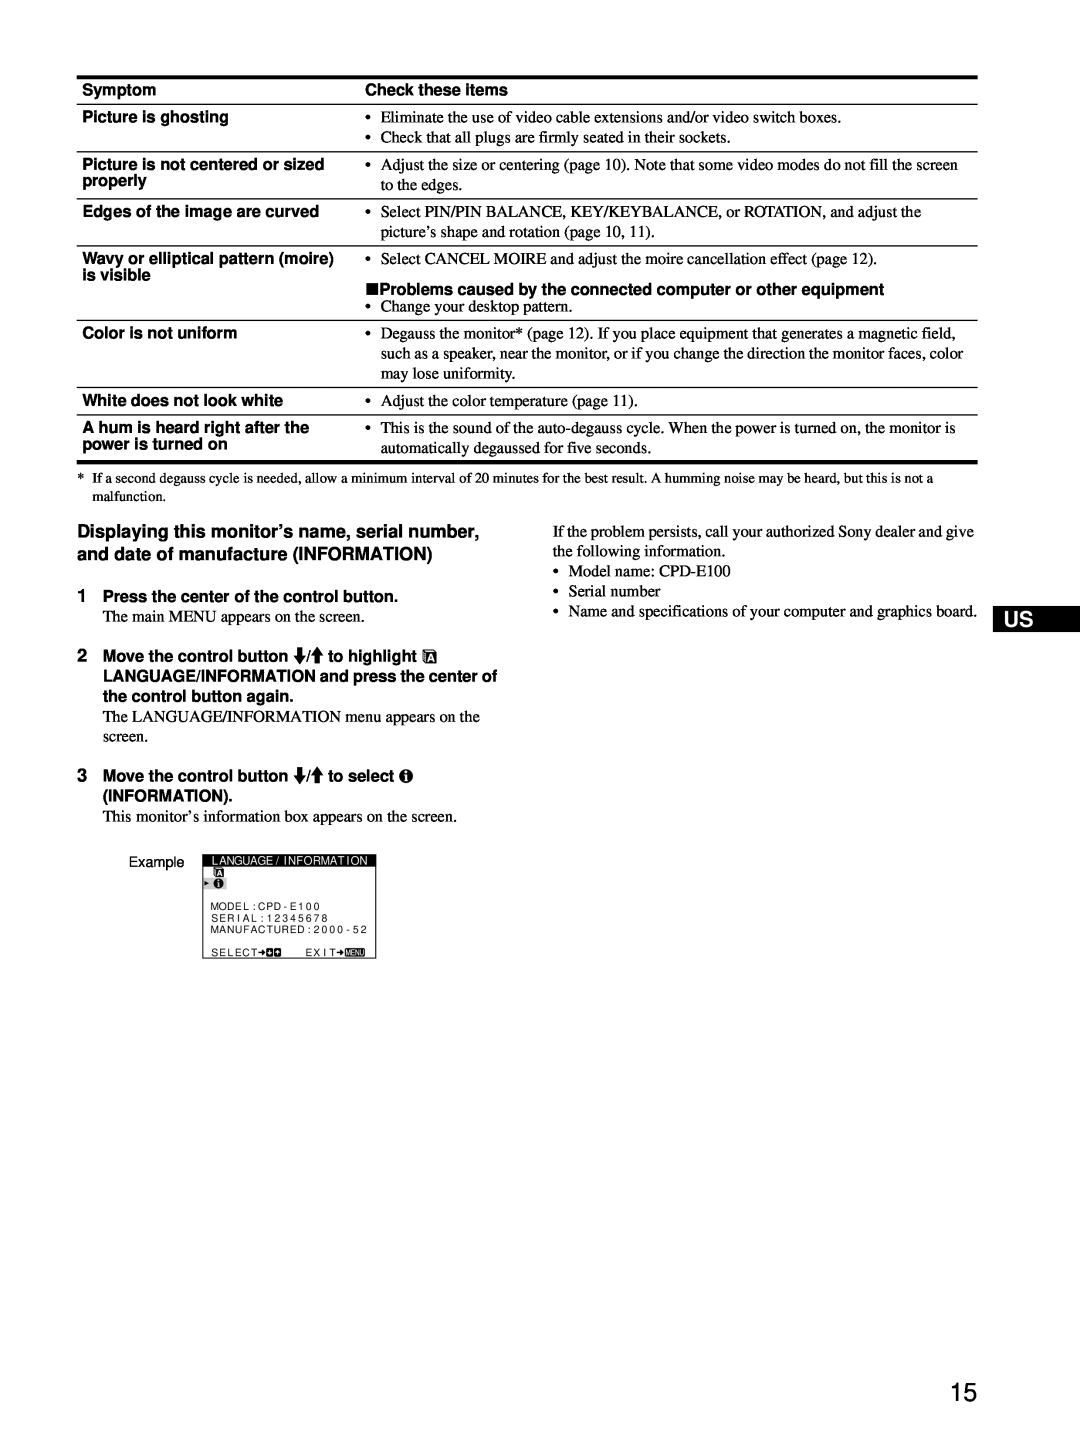 Sony CPD-E100 manual Example 